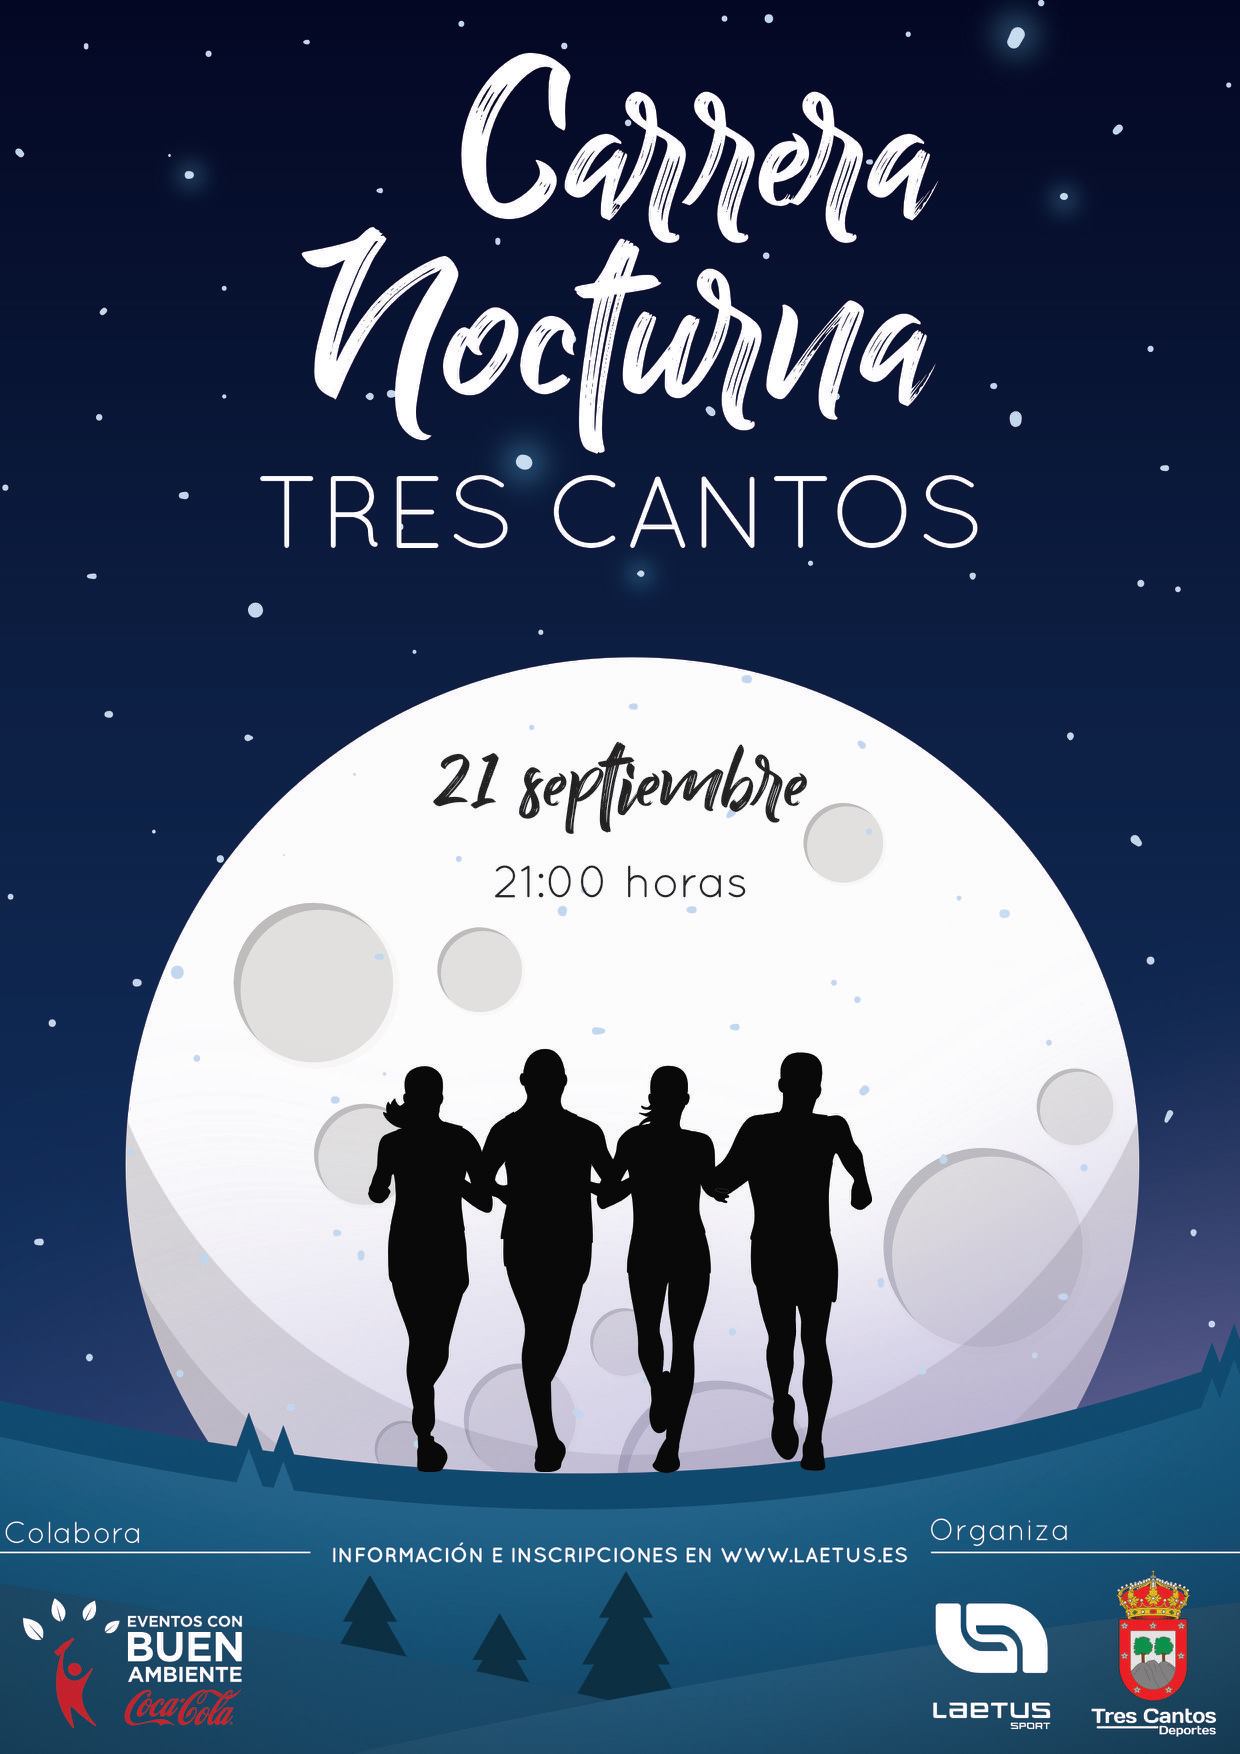 Carrera Nocturna Tres Cantos 2019